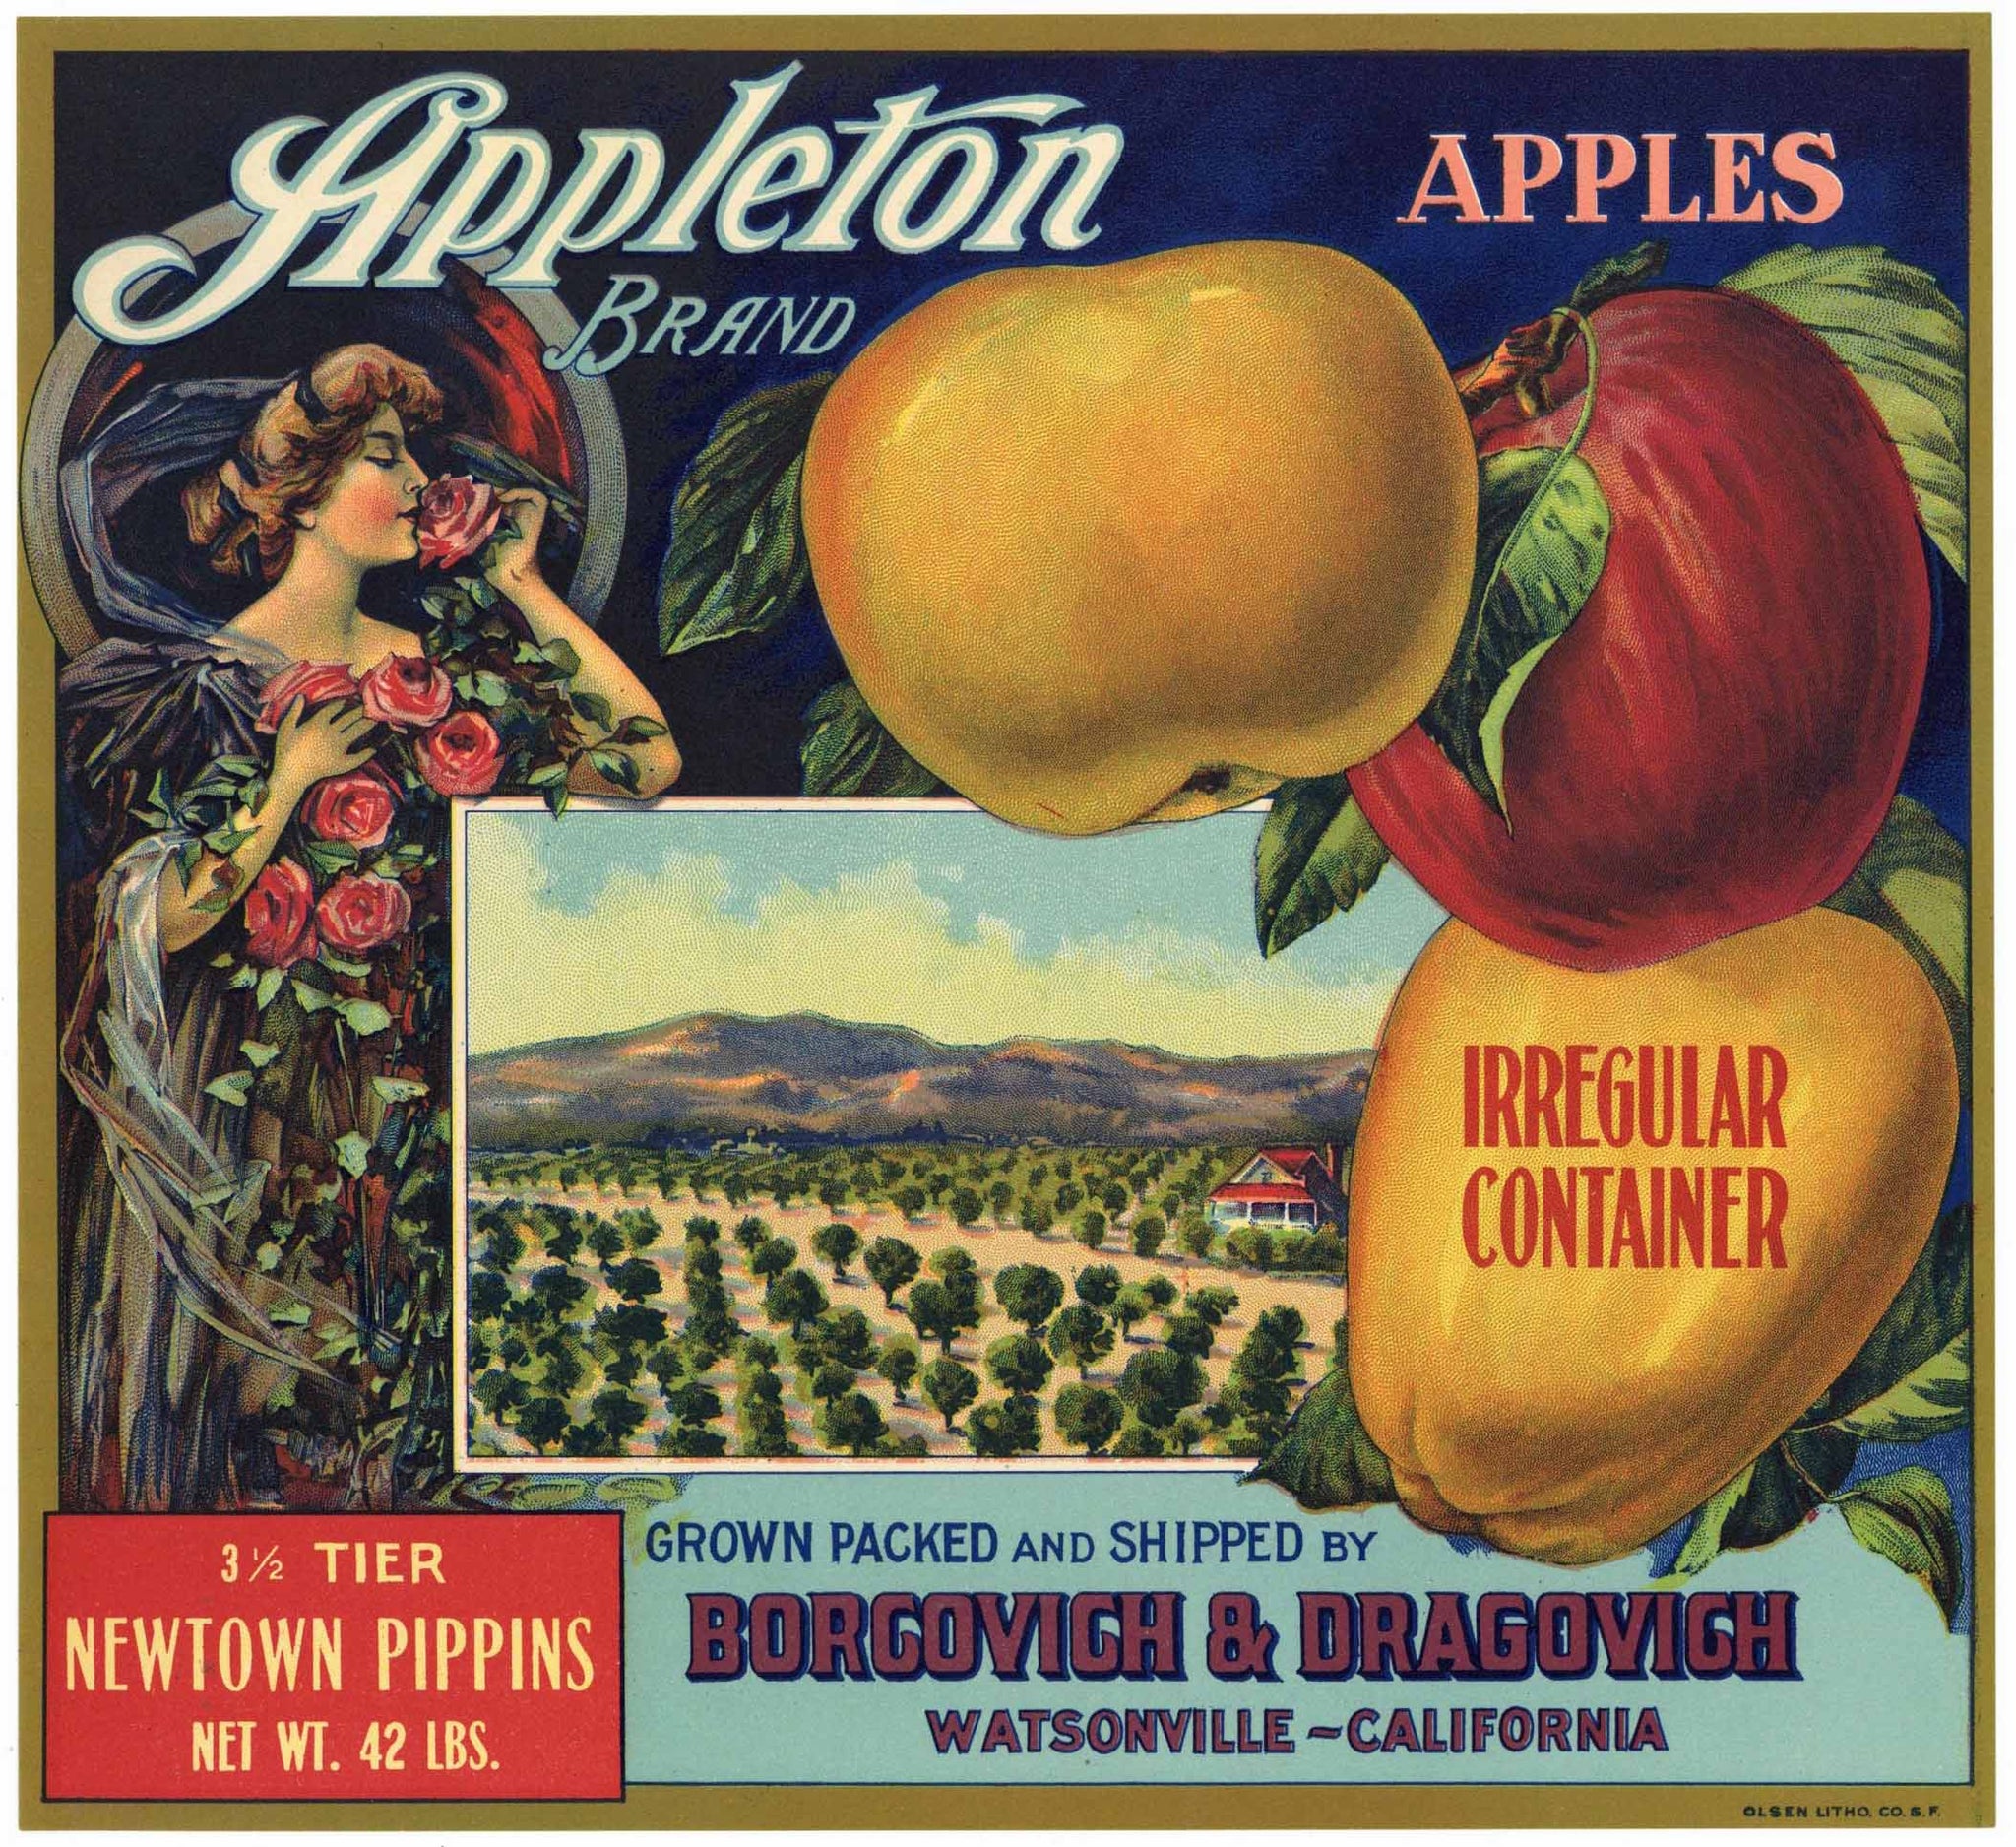 Appleton Brand Vintage Watsonville Apple Crate Label, op, 3 1/2 tier on lower left